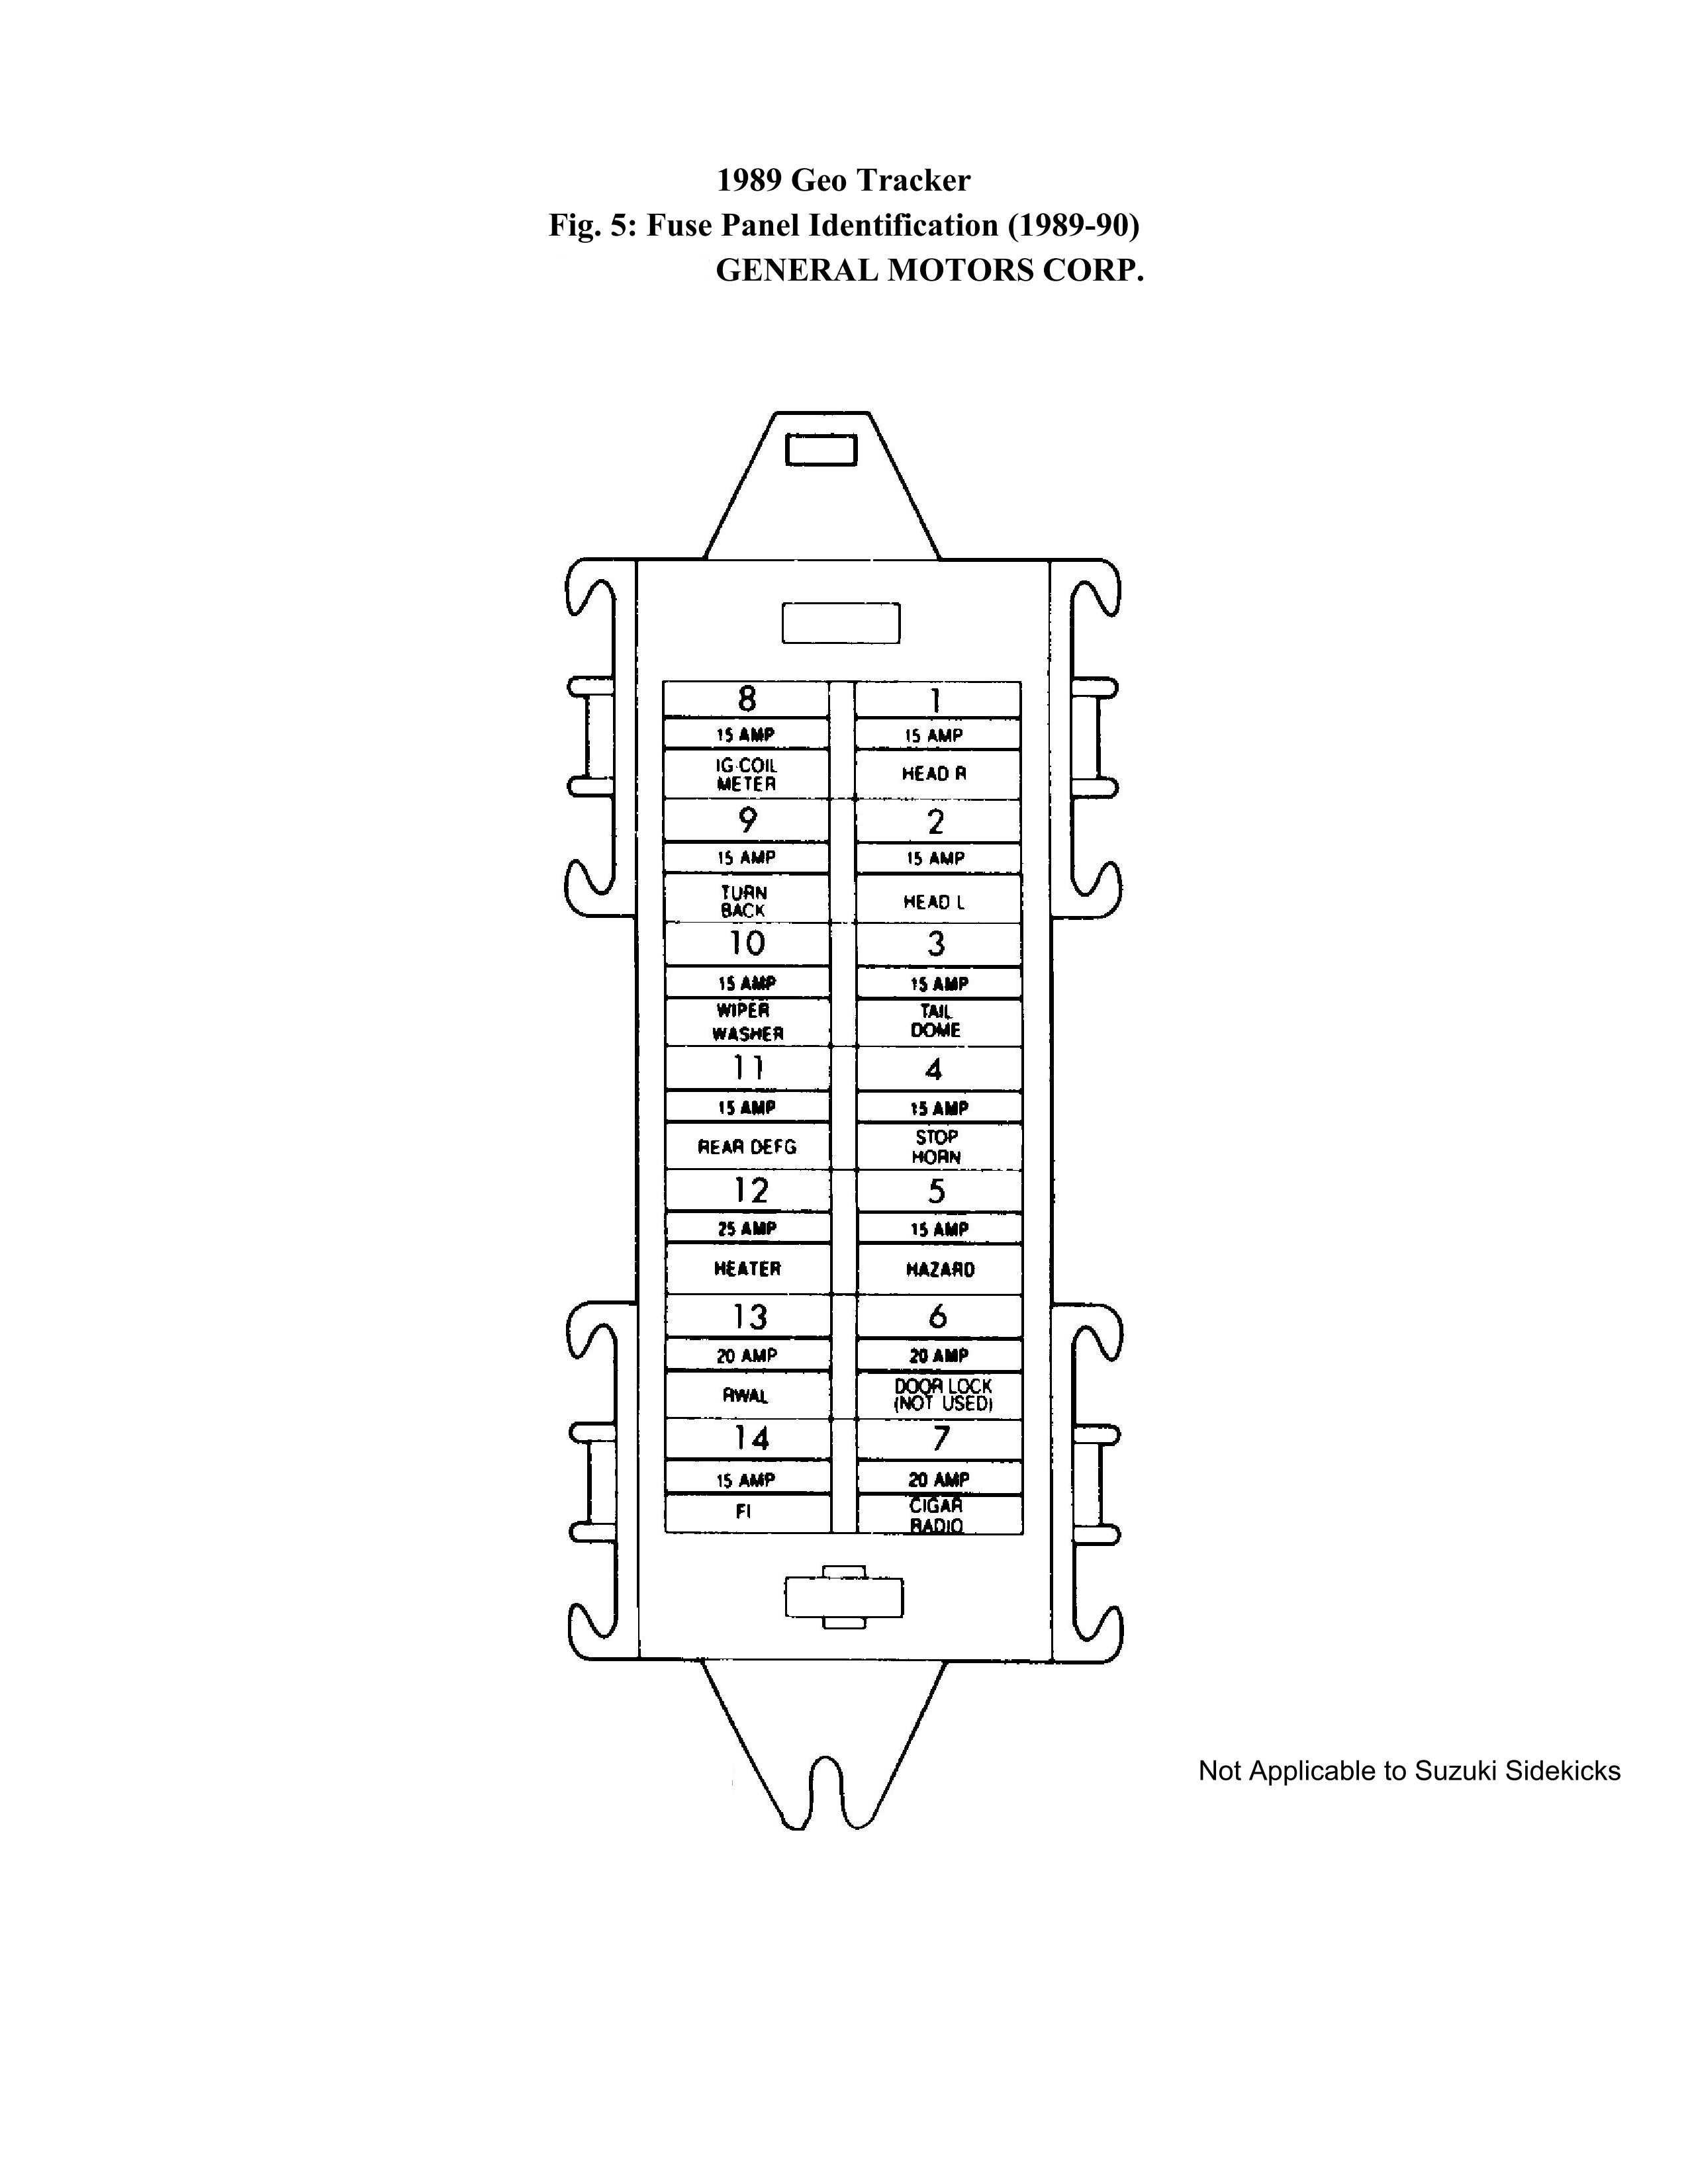 Suzuki Sidekick Engine Diagram Diag Jumpers Of Suzuki Sidekick Engine Diagram